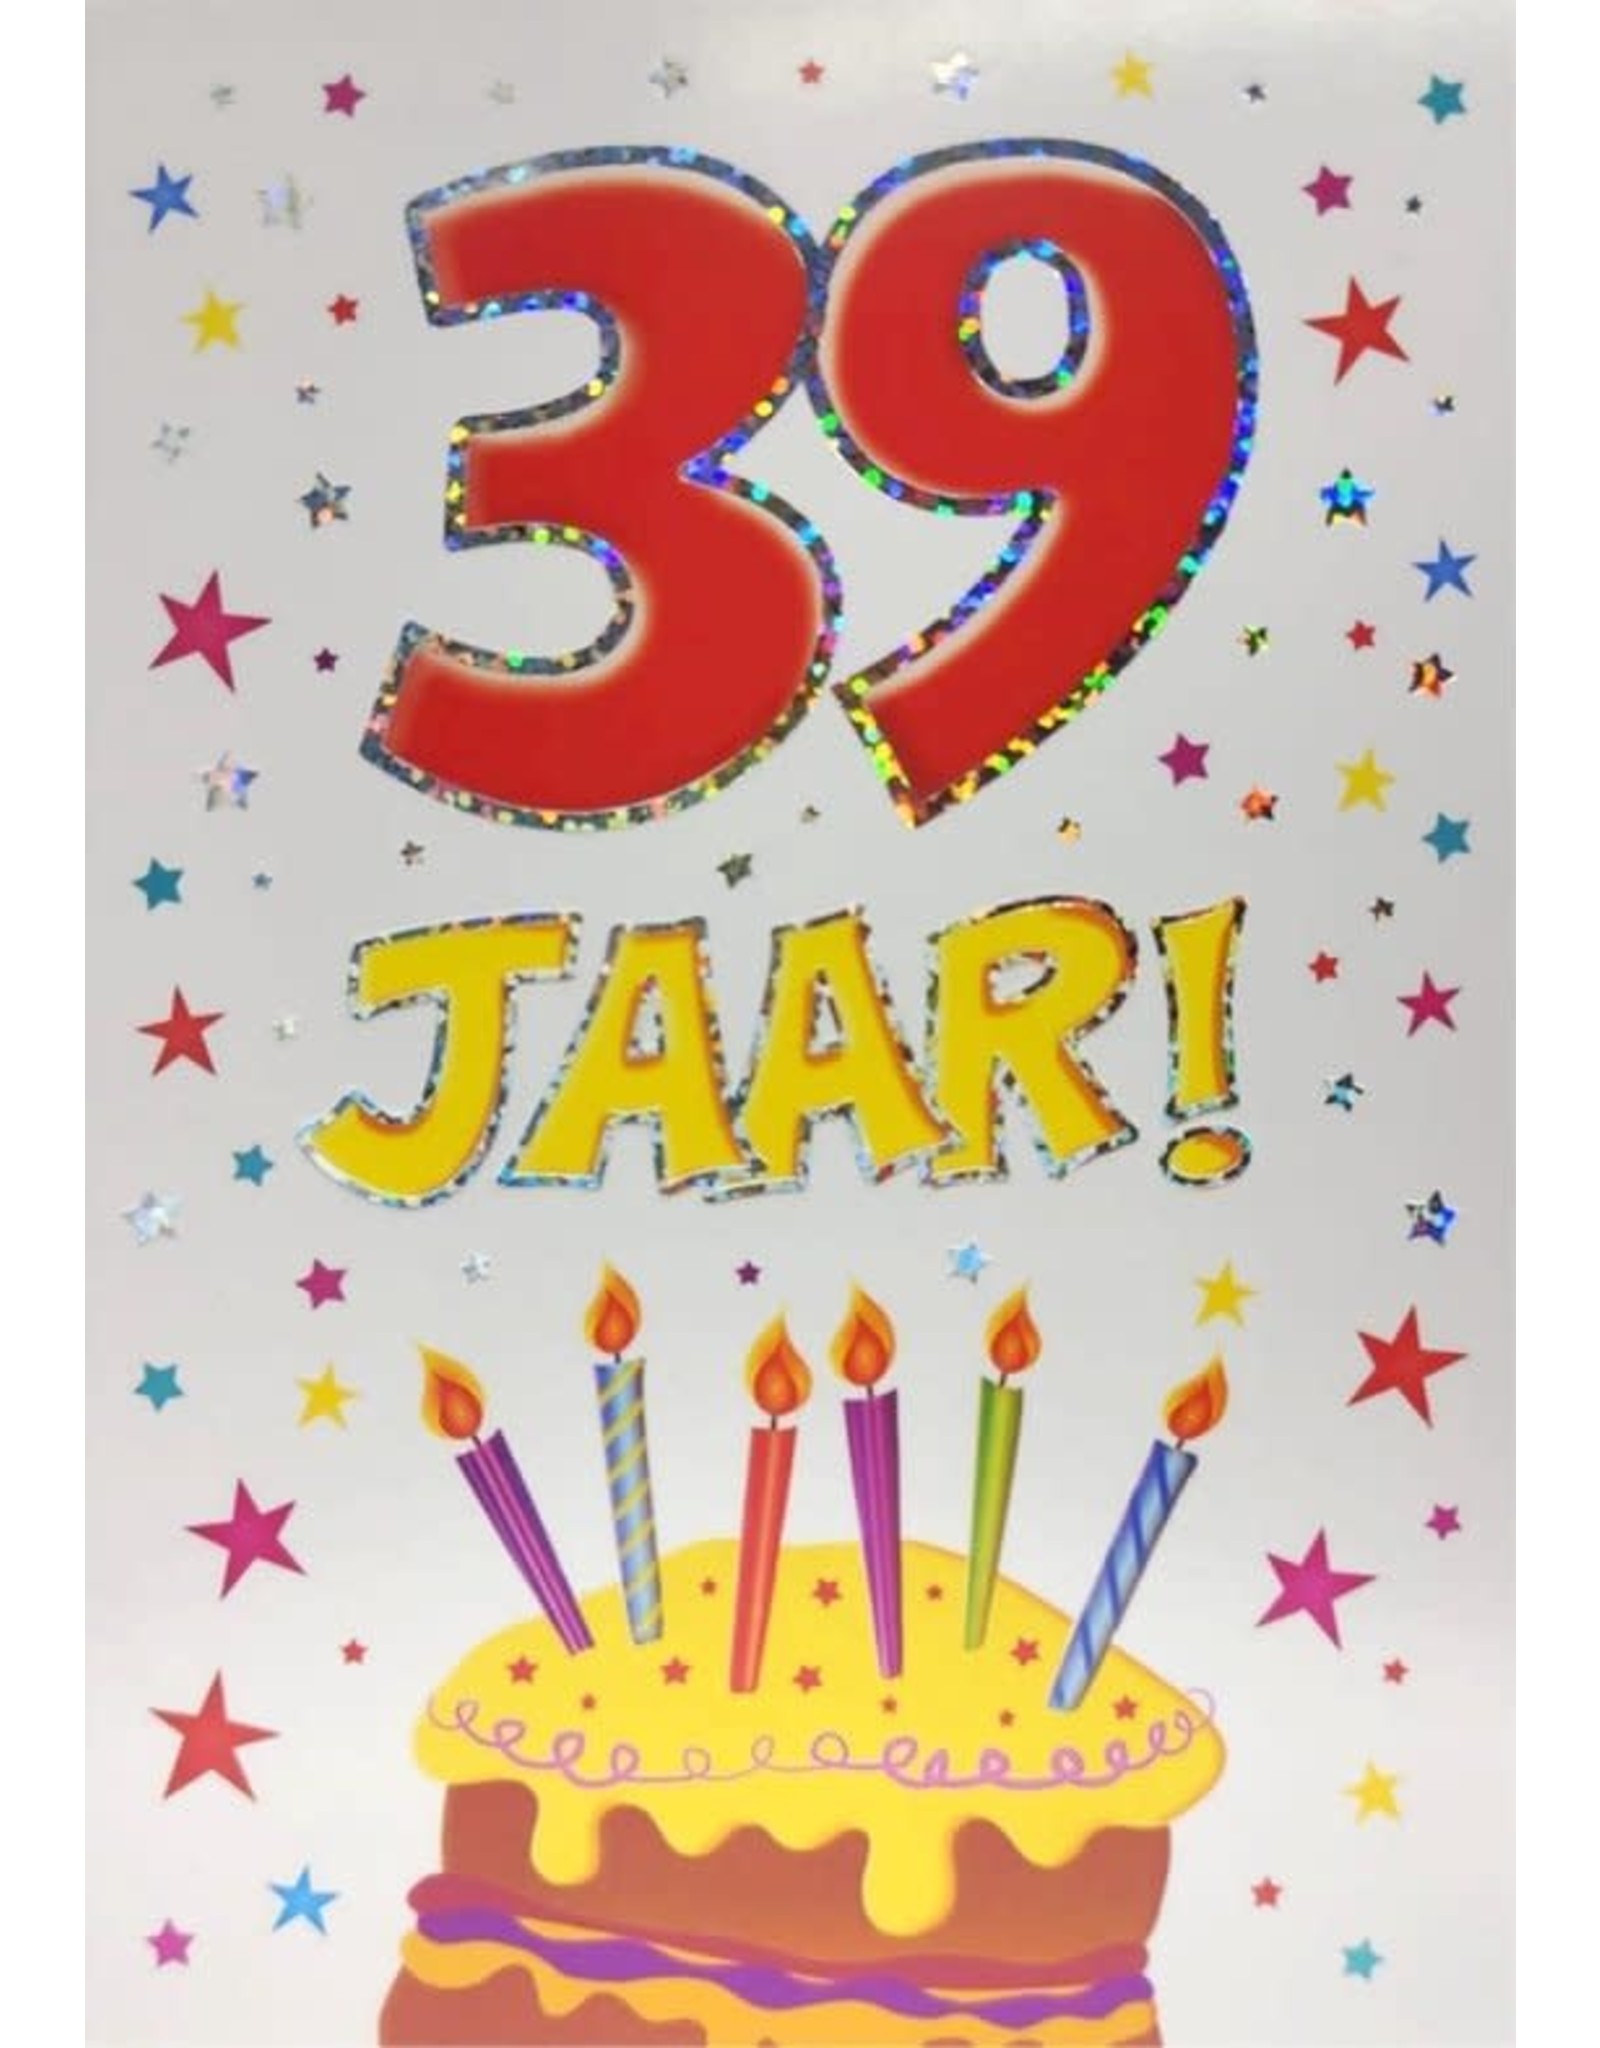 ARTIGE Kaart - That funny age - 39 Jaar - AT1033-F